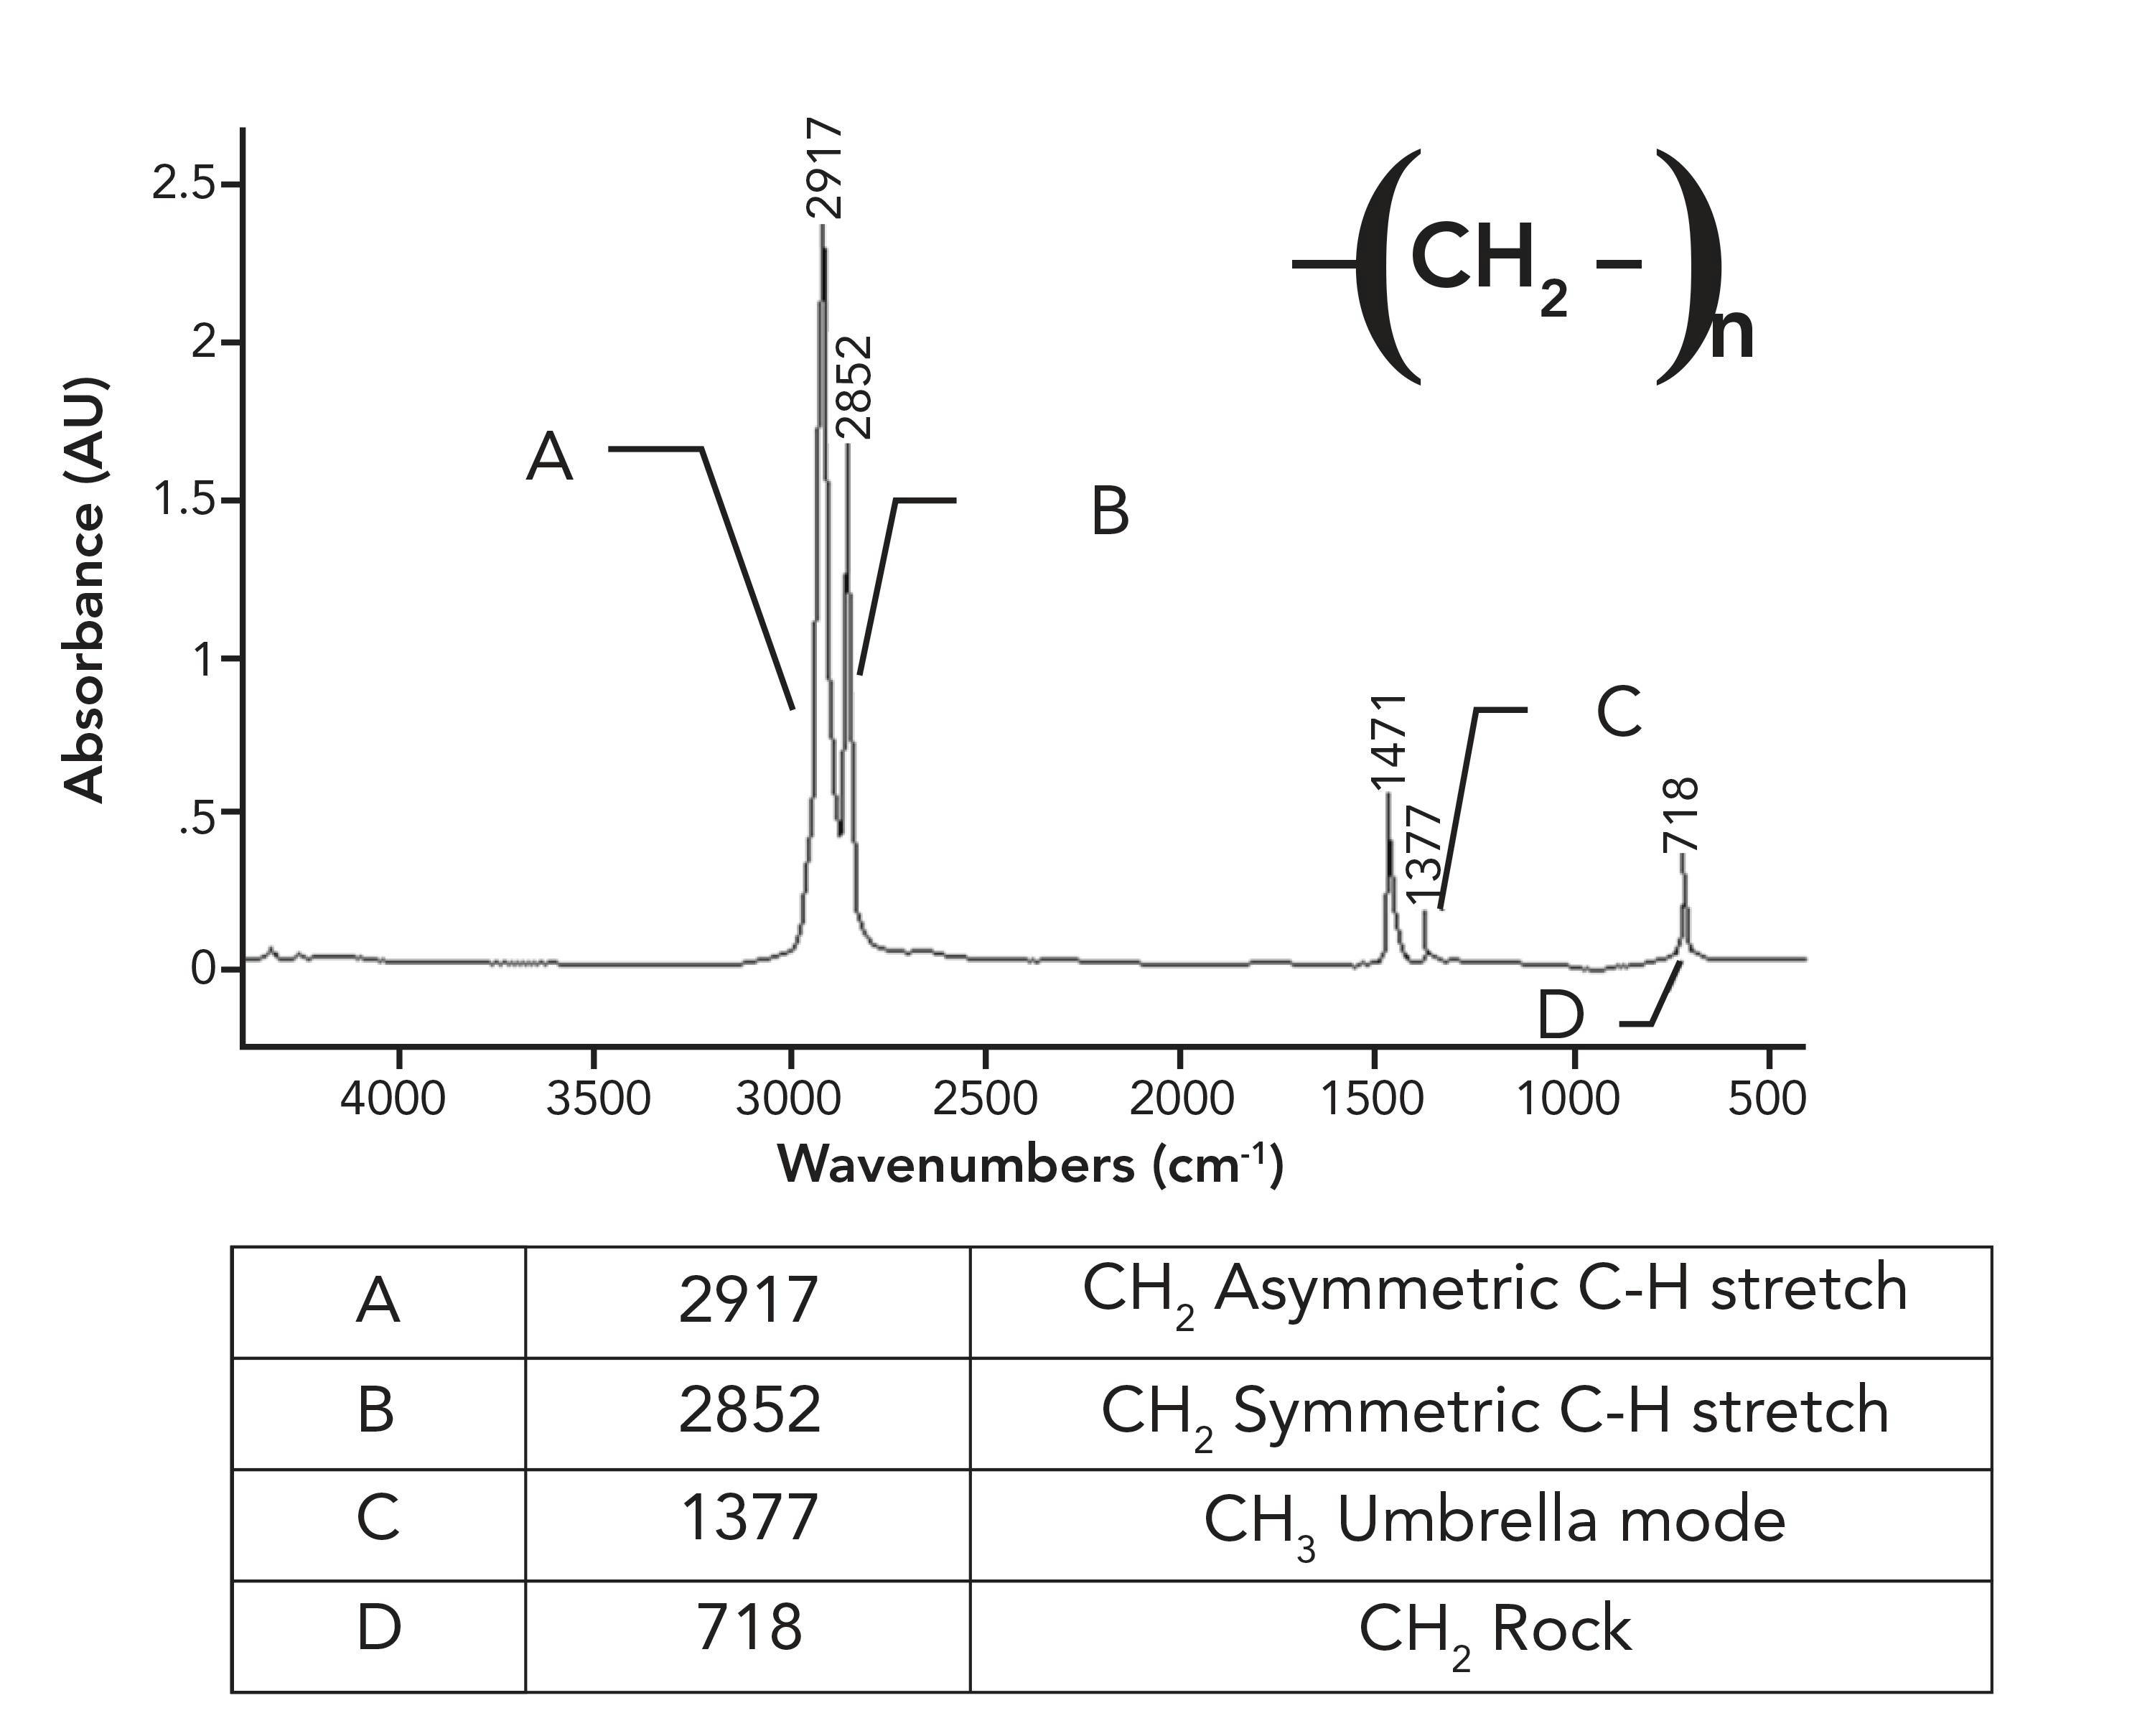 Figure 5: The infrared spectrum of low density polyethylene (LDPE).